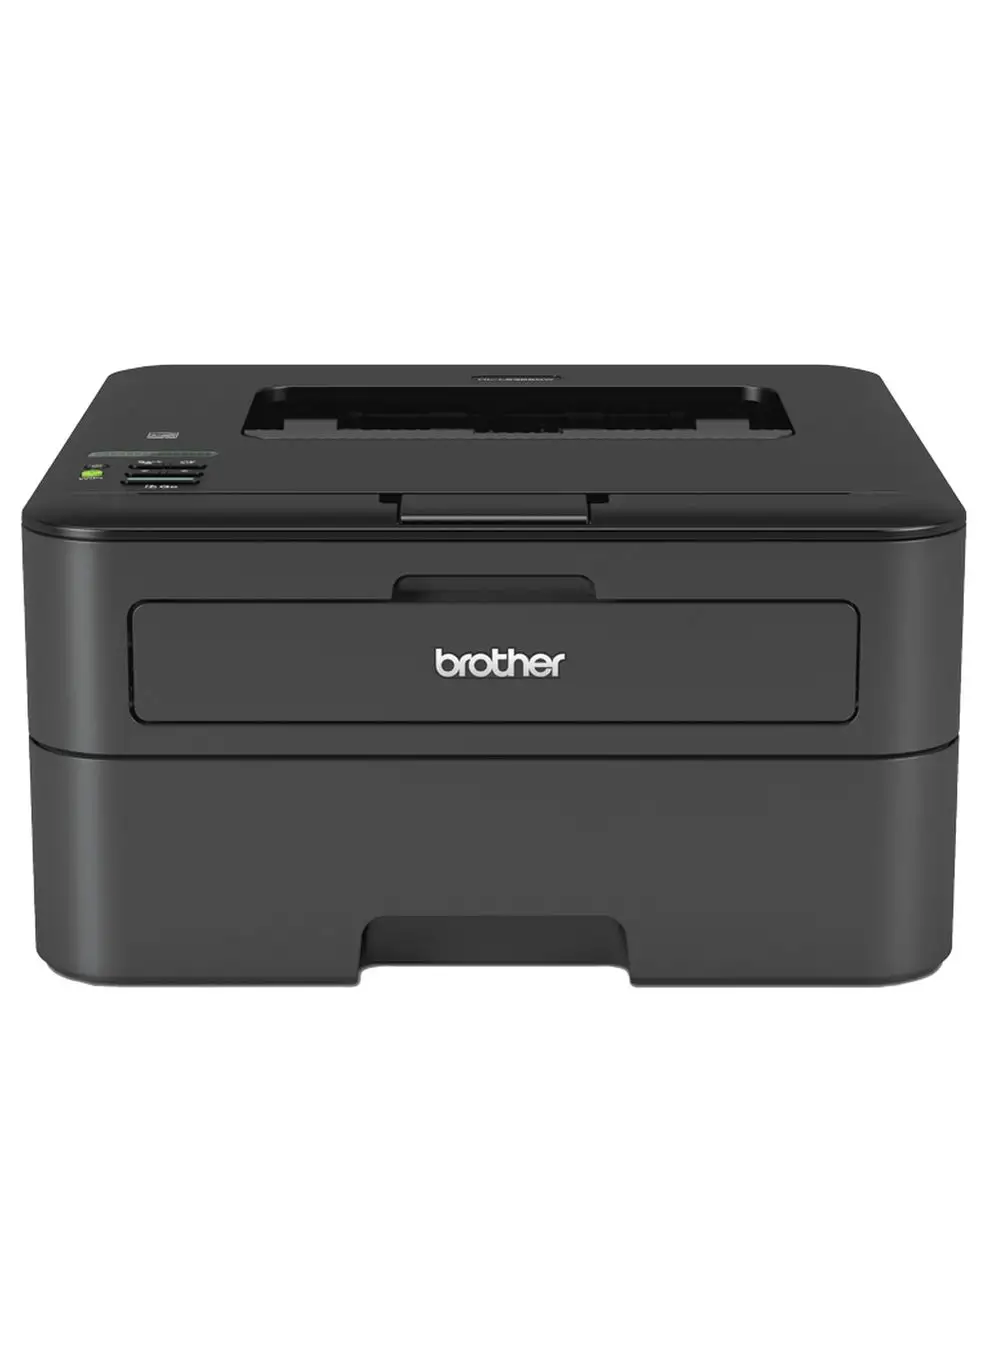 brother Monochrome Laser Printer Black